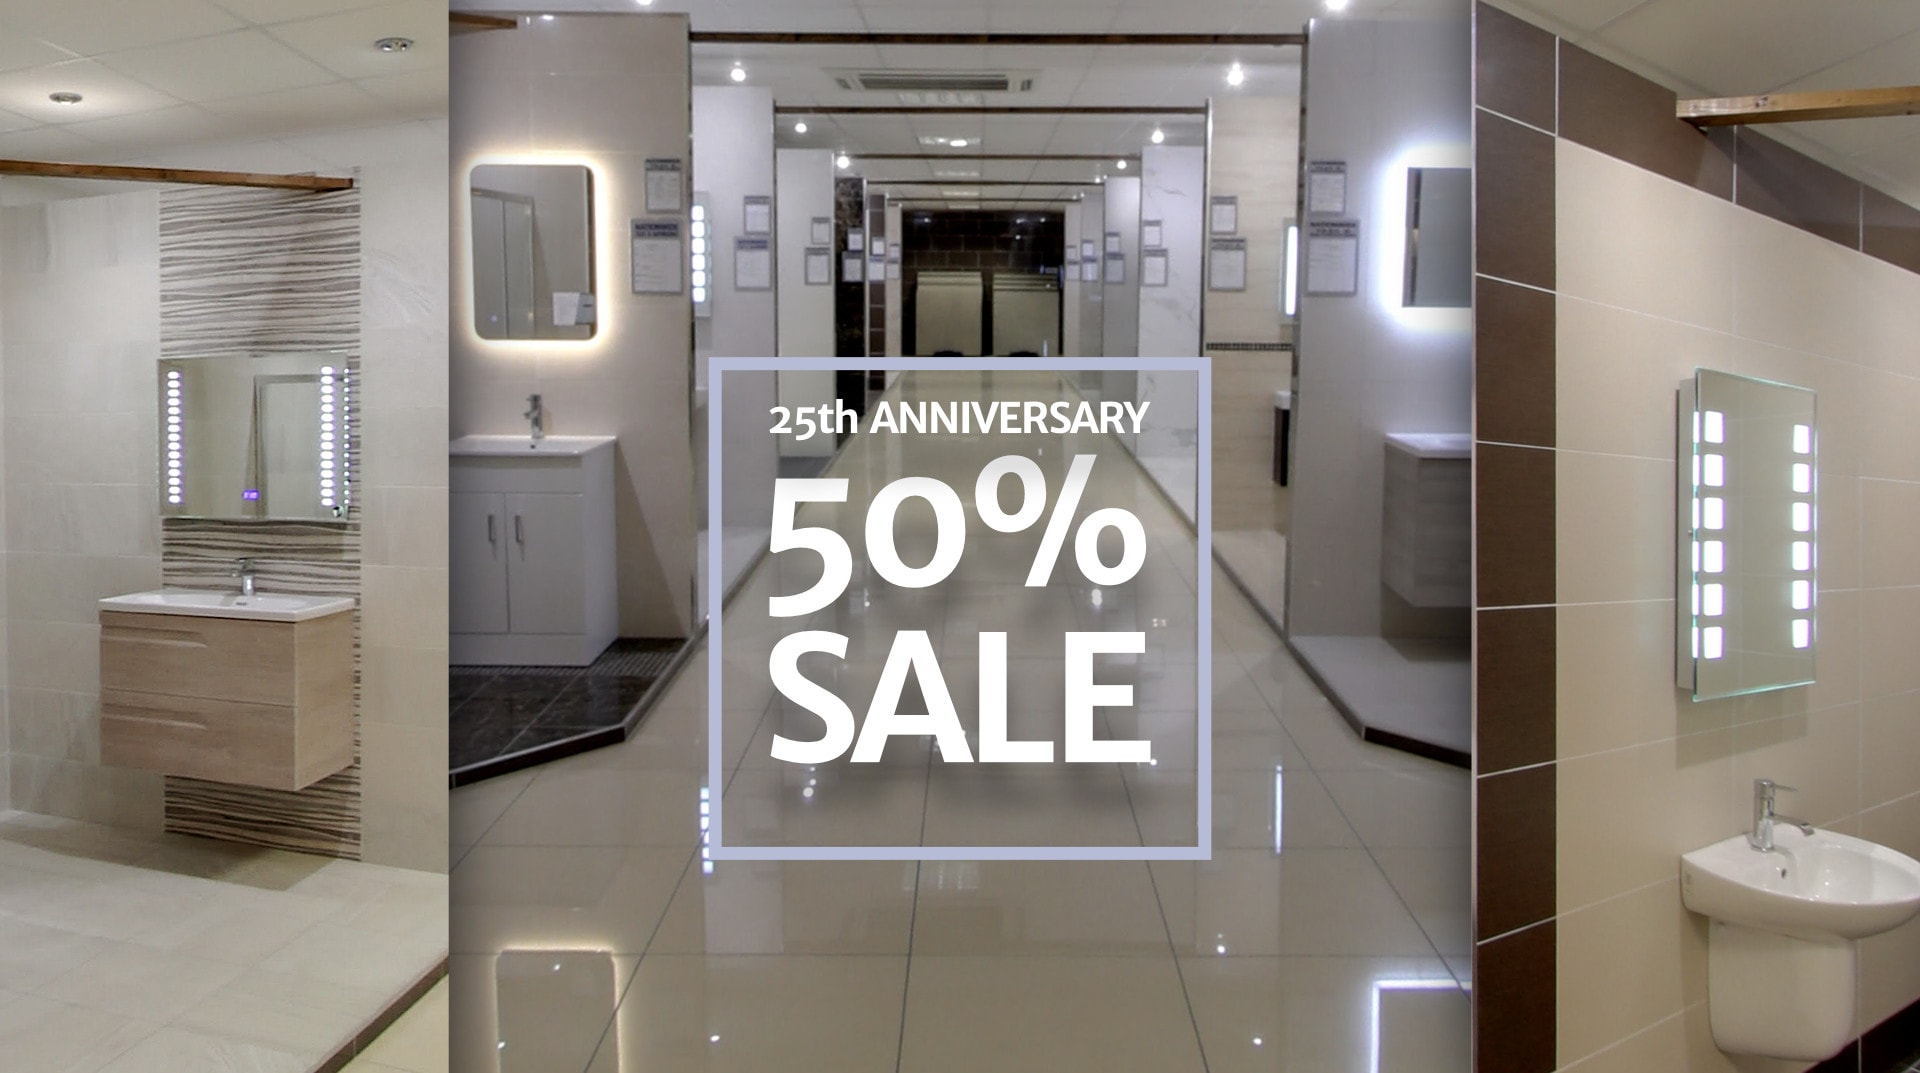 25th Anniversary 50% SALE